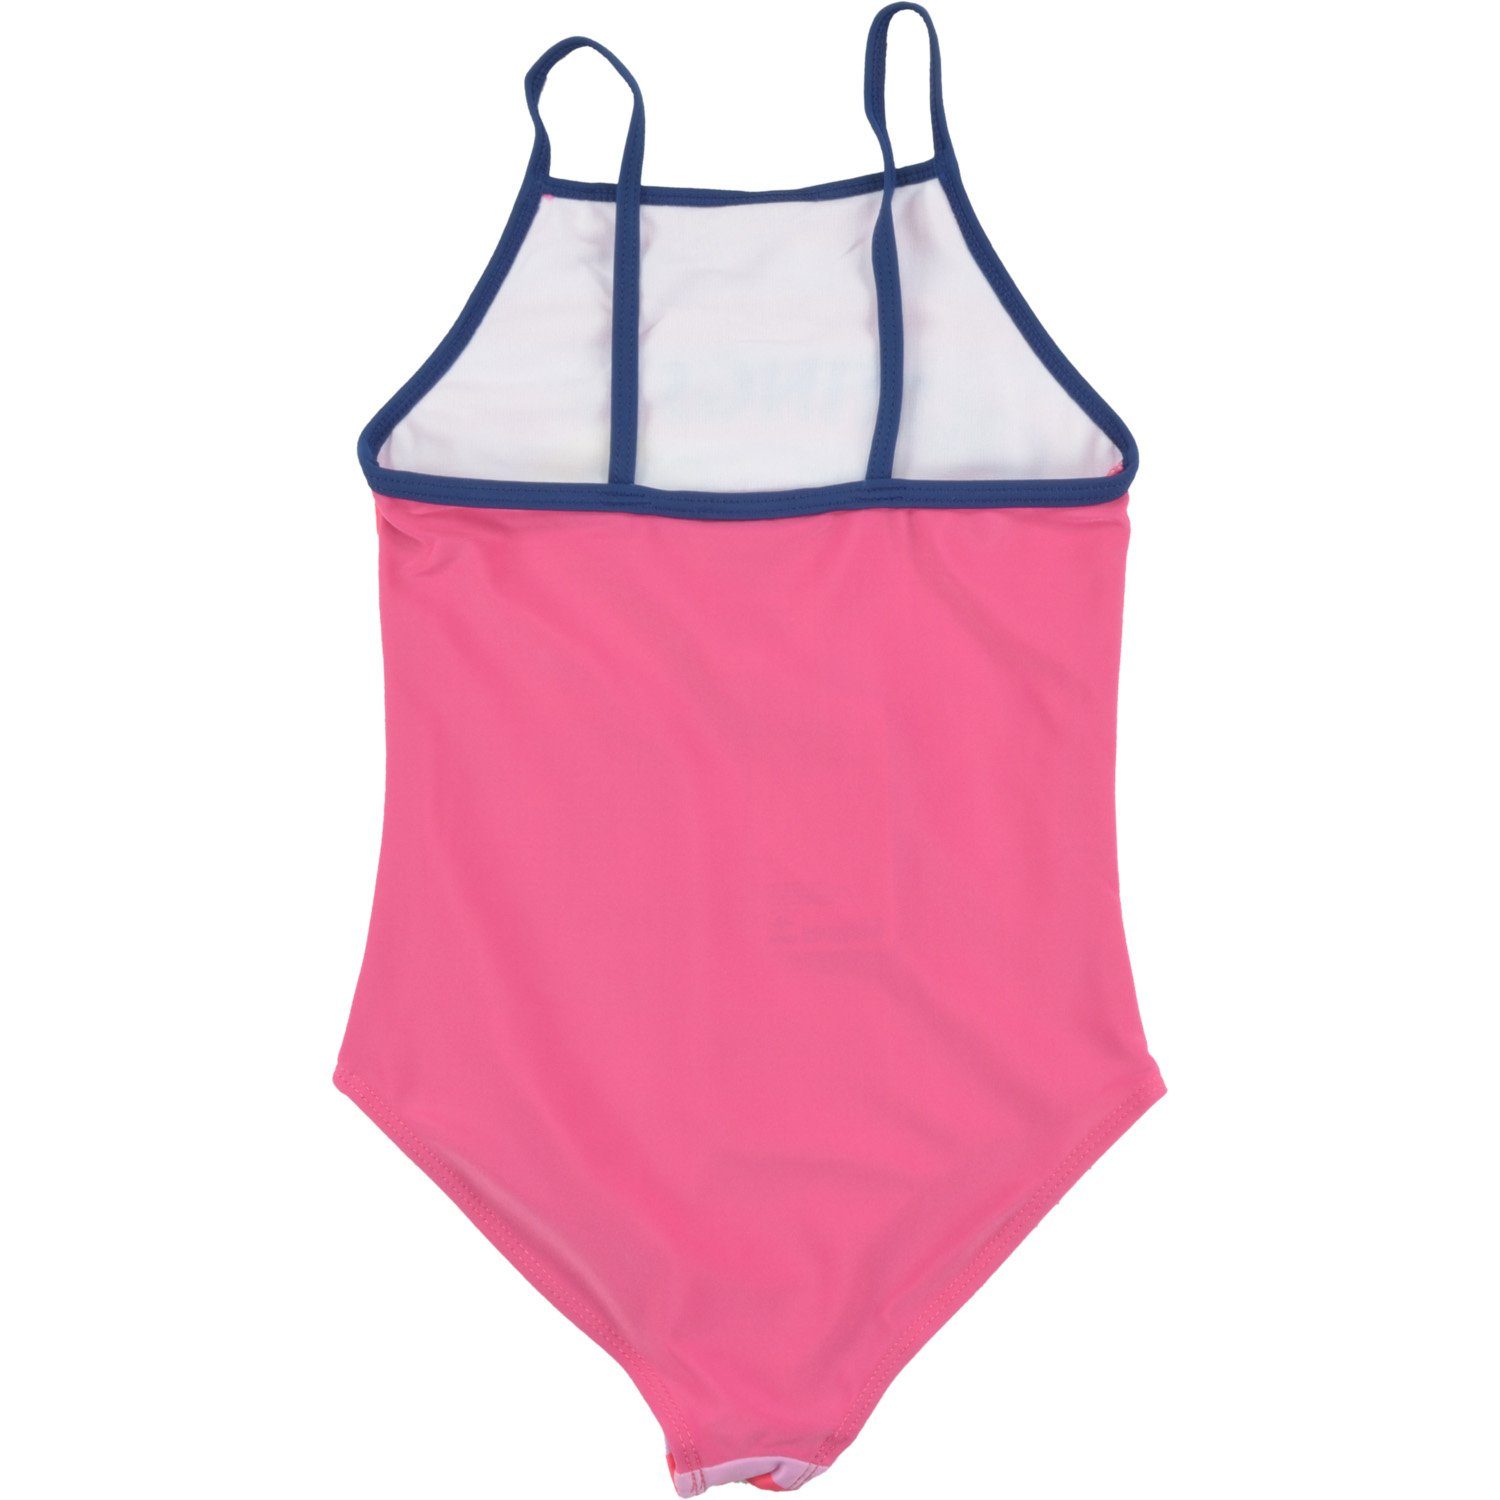 United Labels® Badeanzug Minions from Badeanzug Greetings für – Beach Mädchen Minion Pink/Rosa